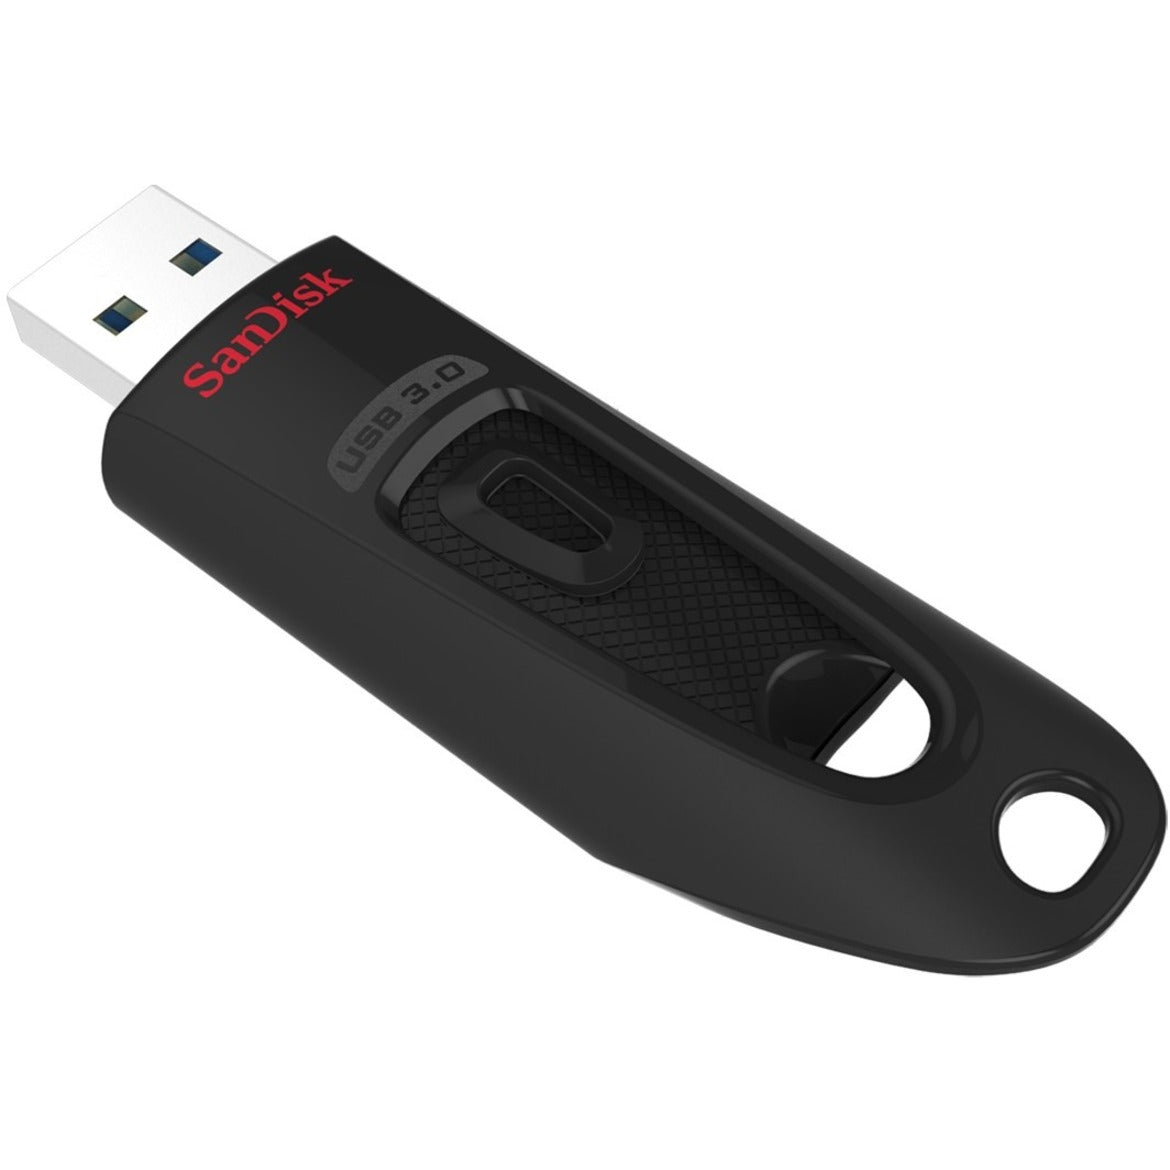 SanDisk Ultra USB 3.0 Flash Drive - 16GB [Discontinued]